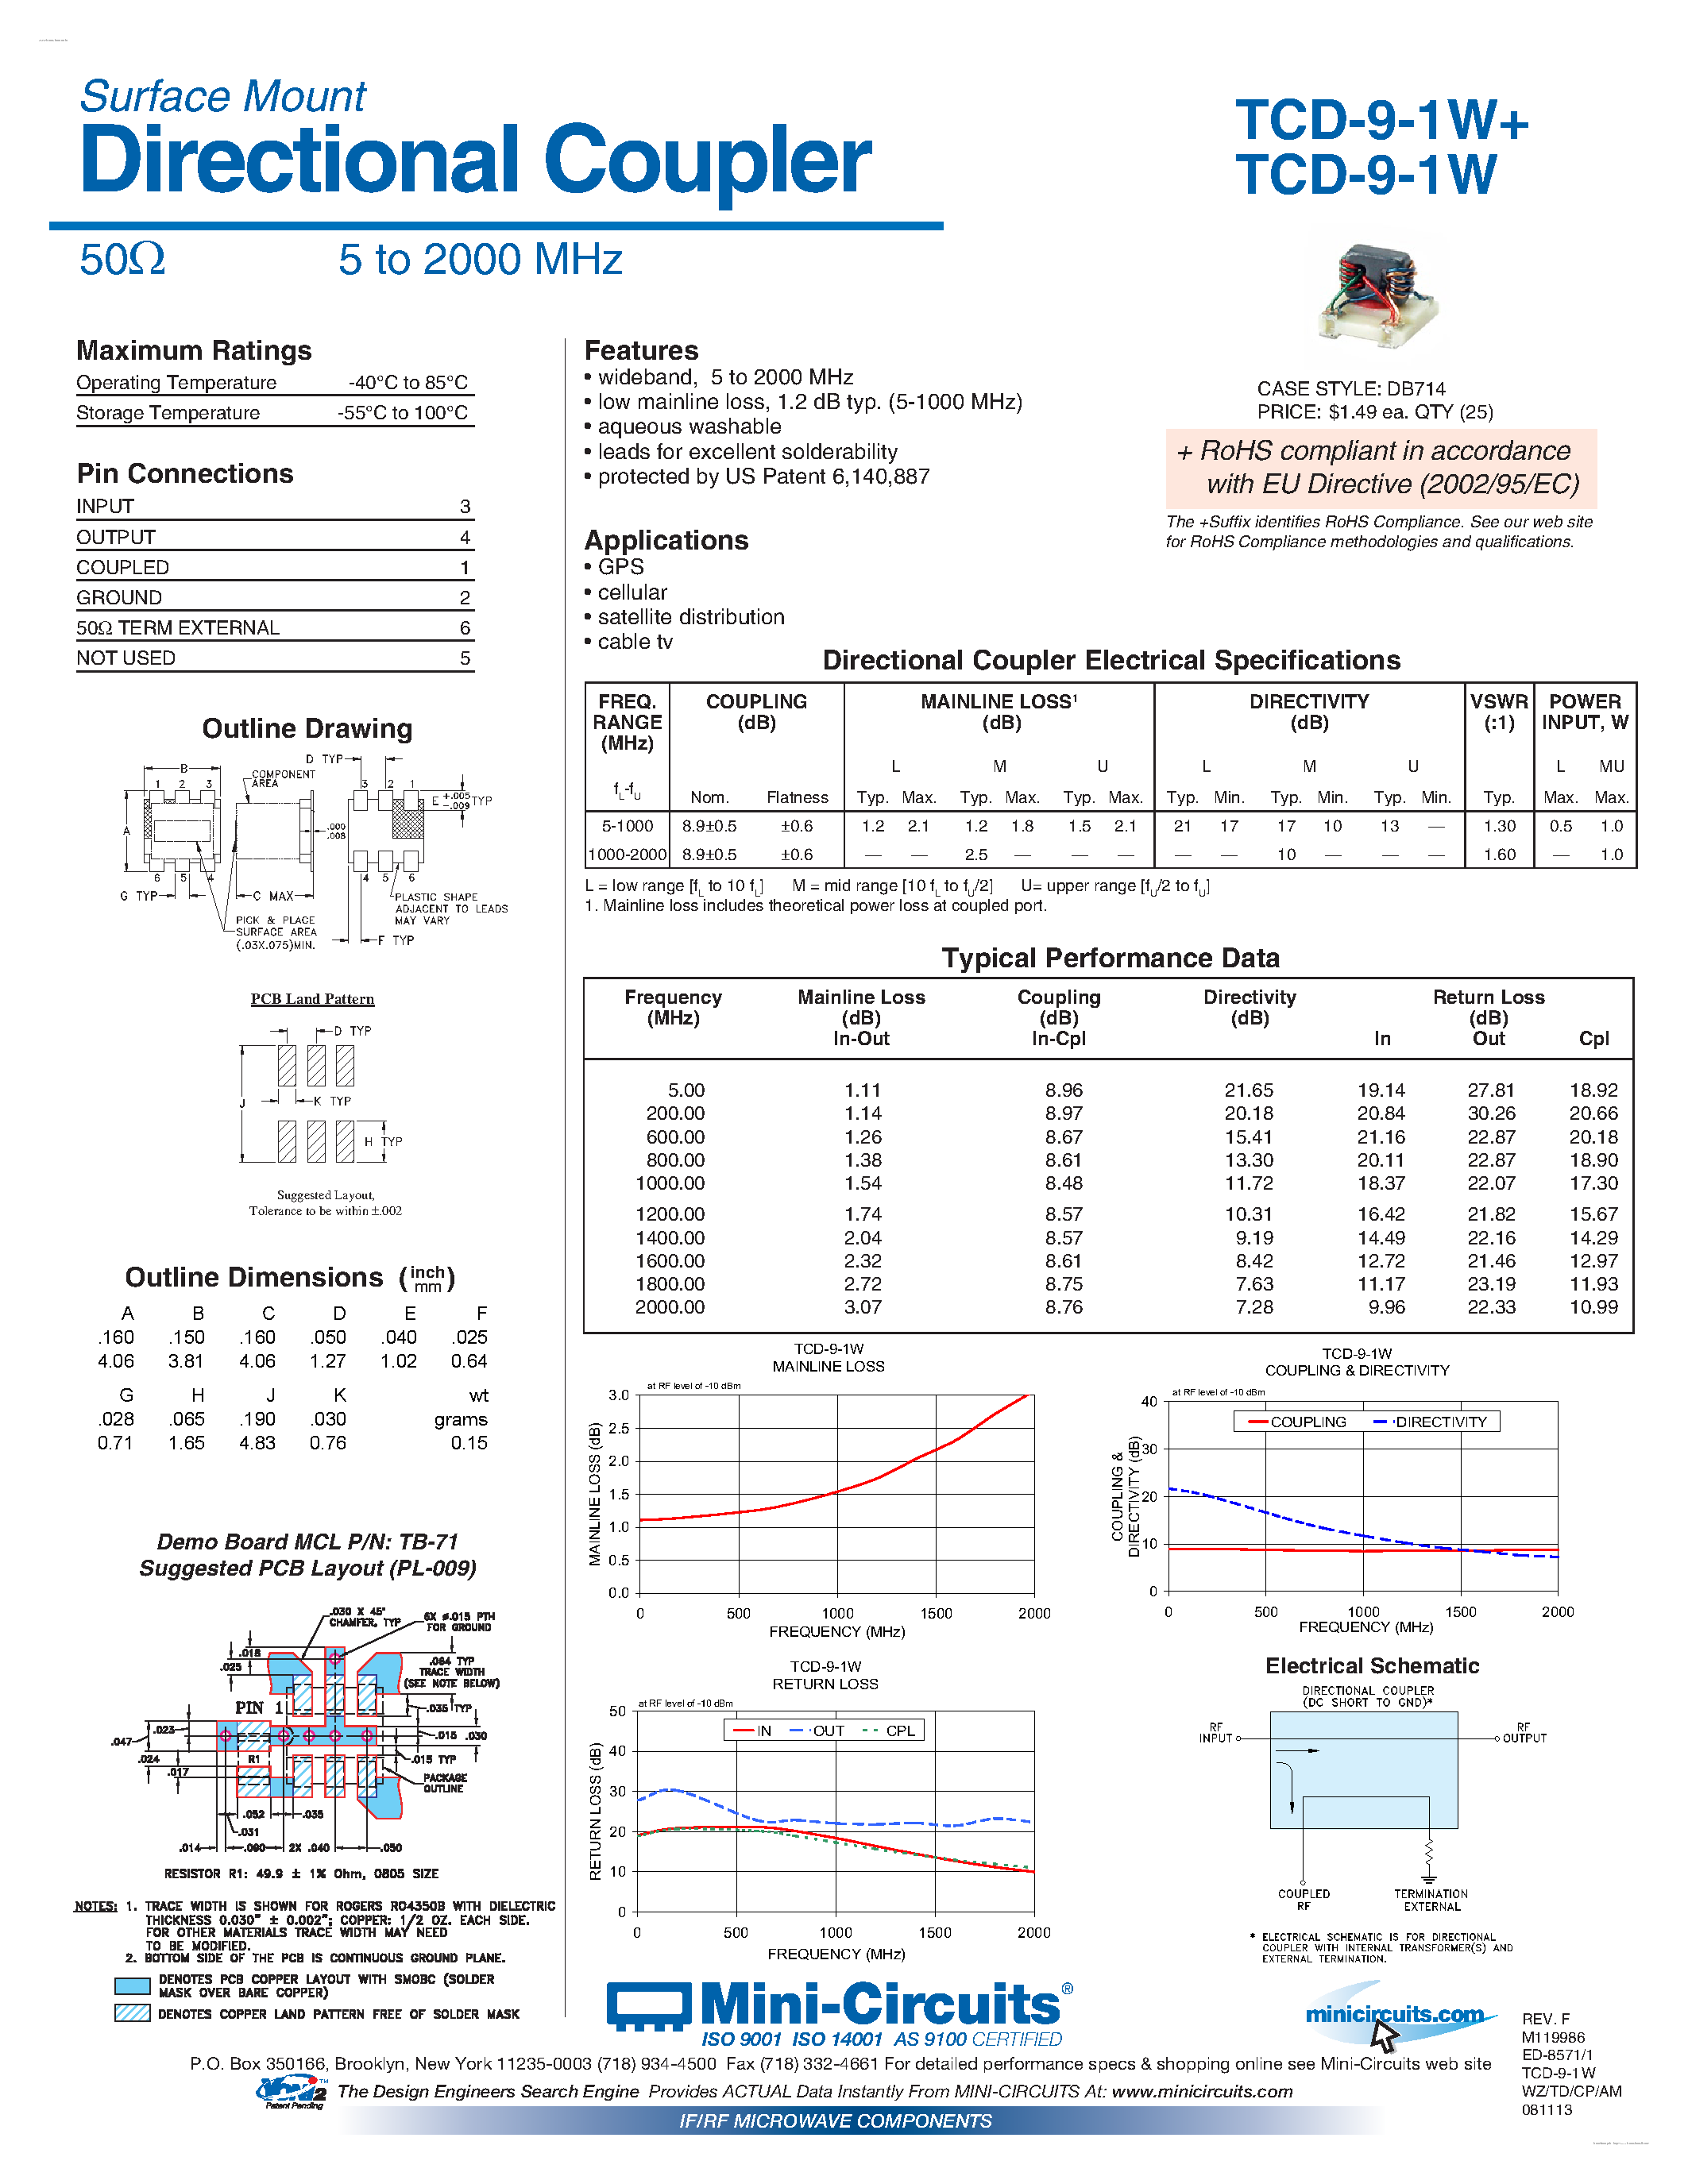 Datasheet TCD-9-1W - Directional Coupler page 1